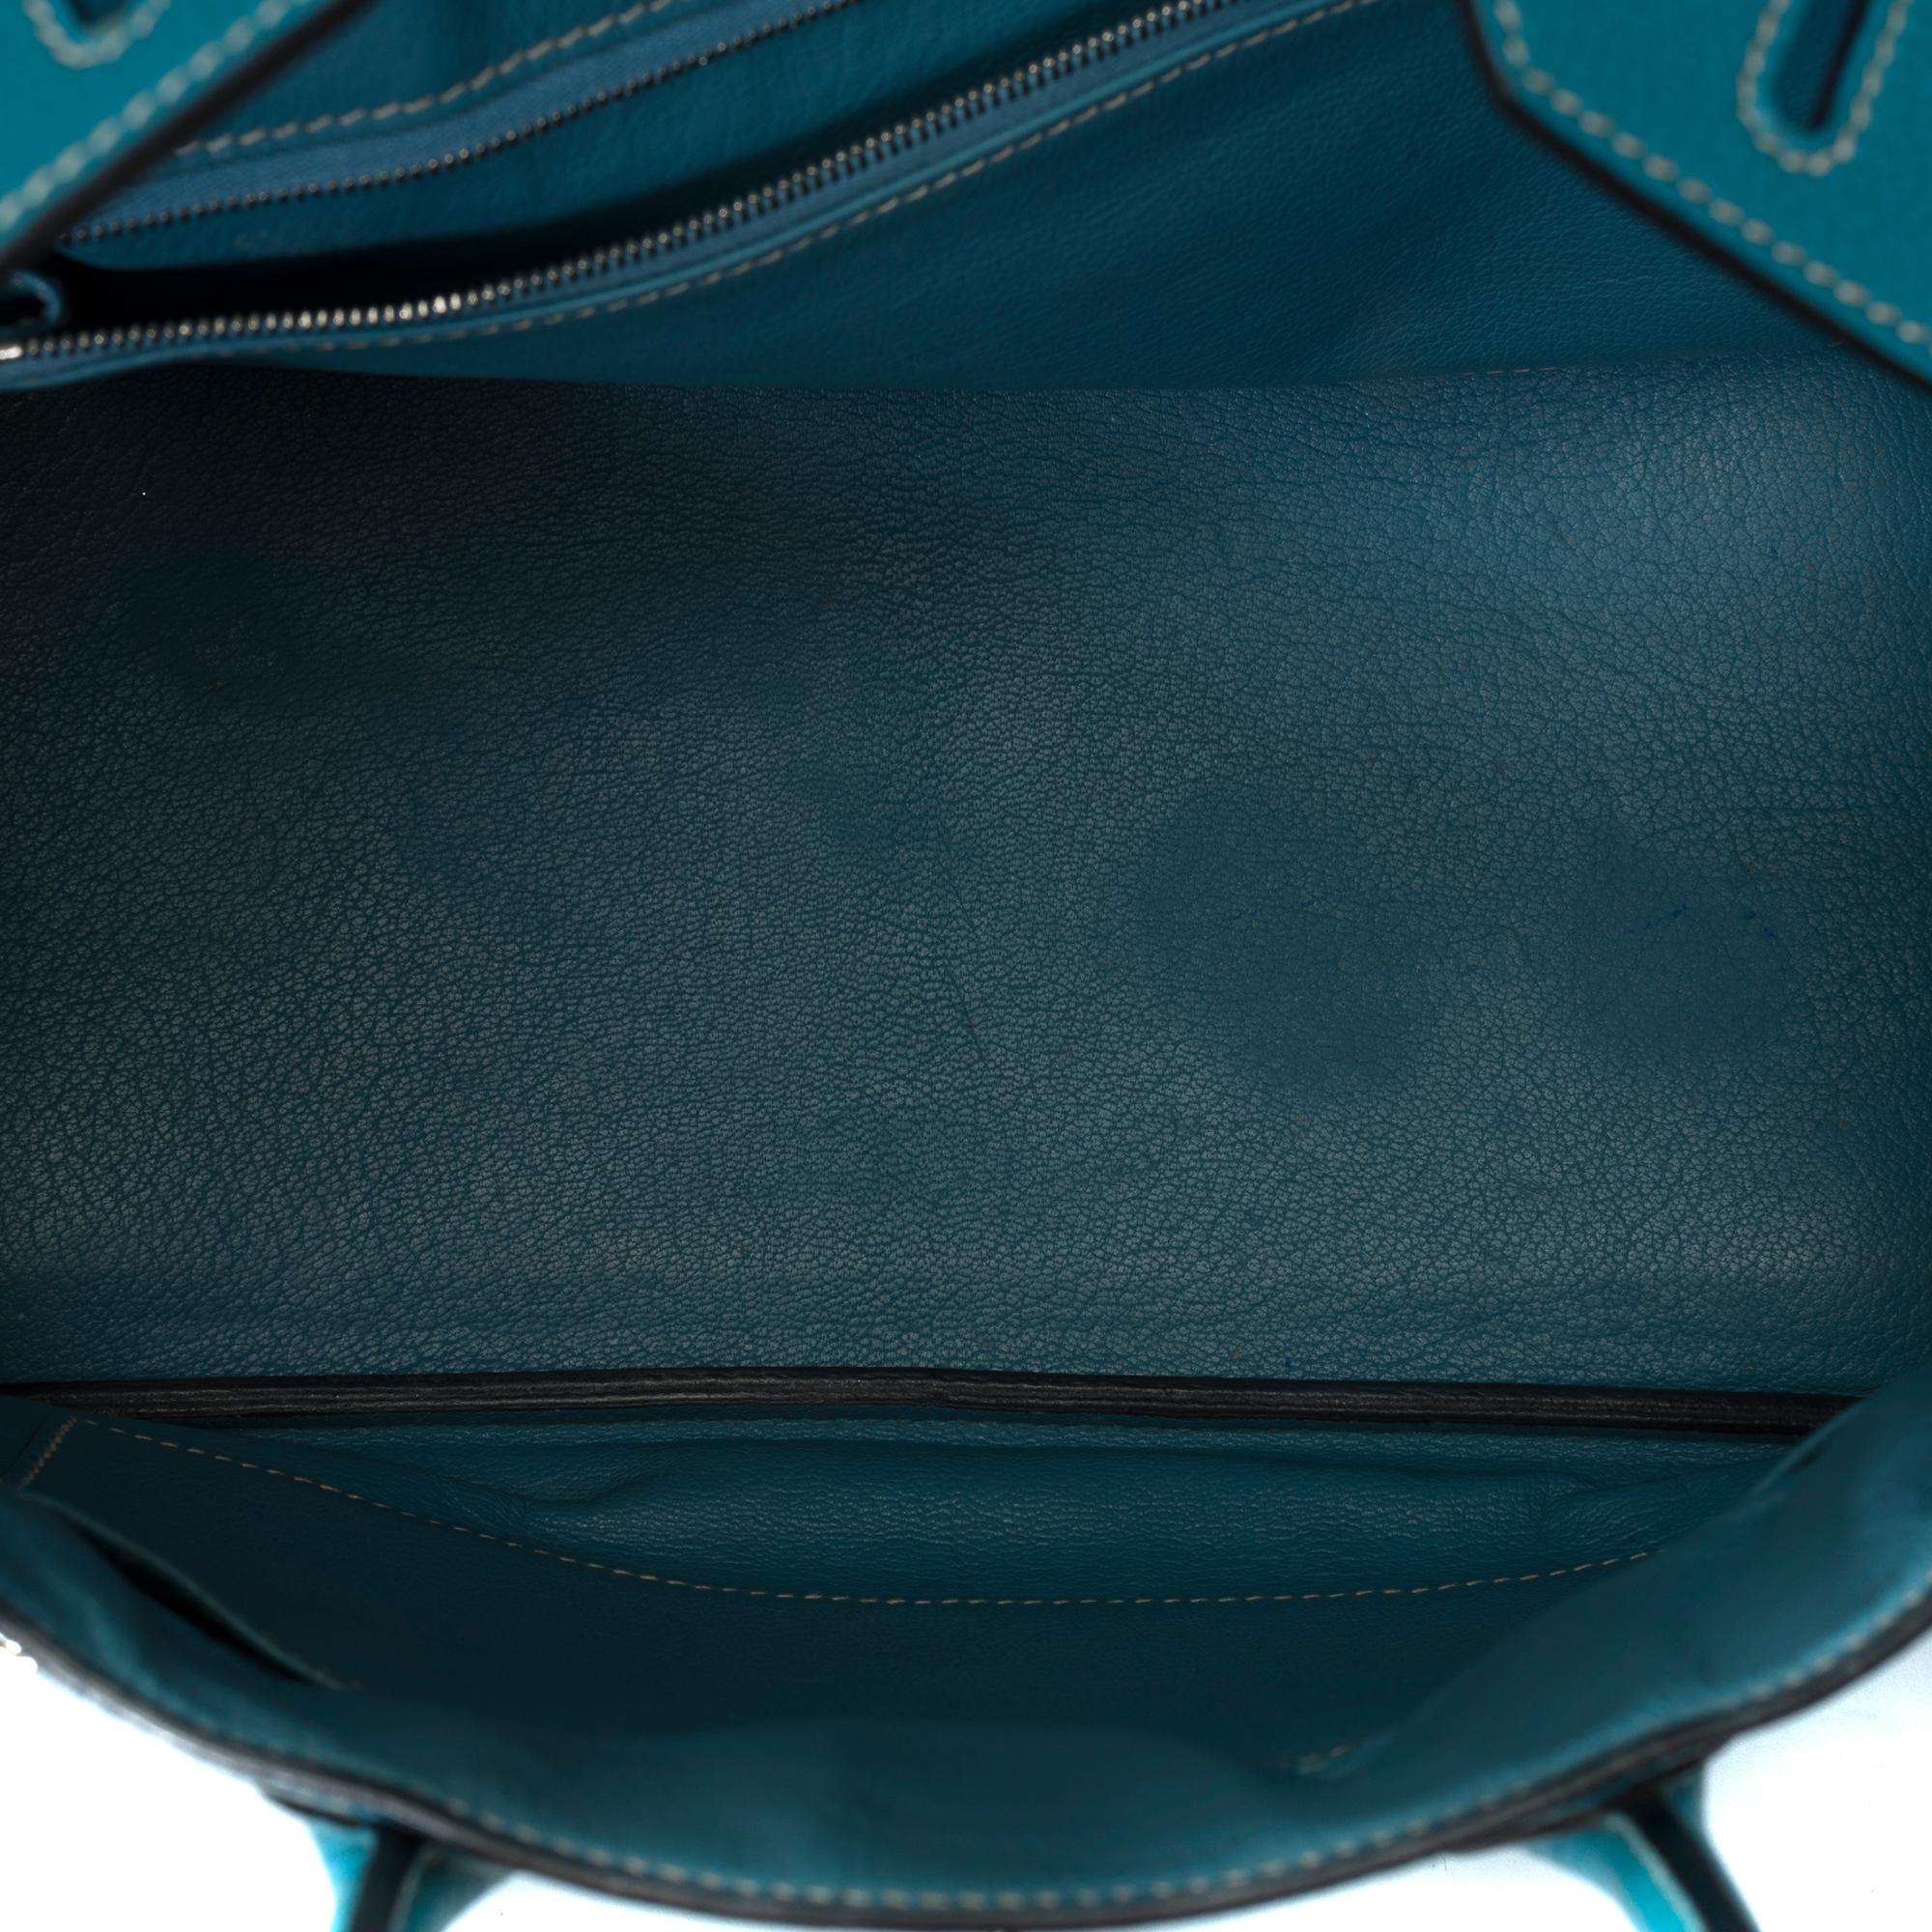 Splendid Hermes Birkin 30 handbag in Blue Jean Togo leather, SHW For Sale 5